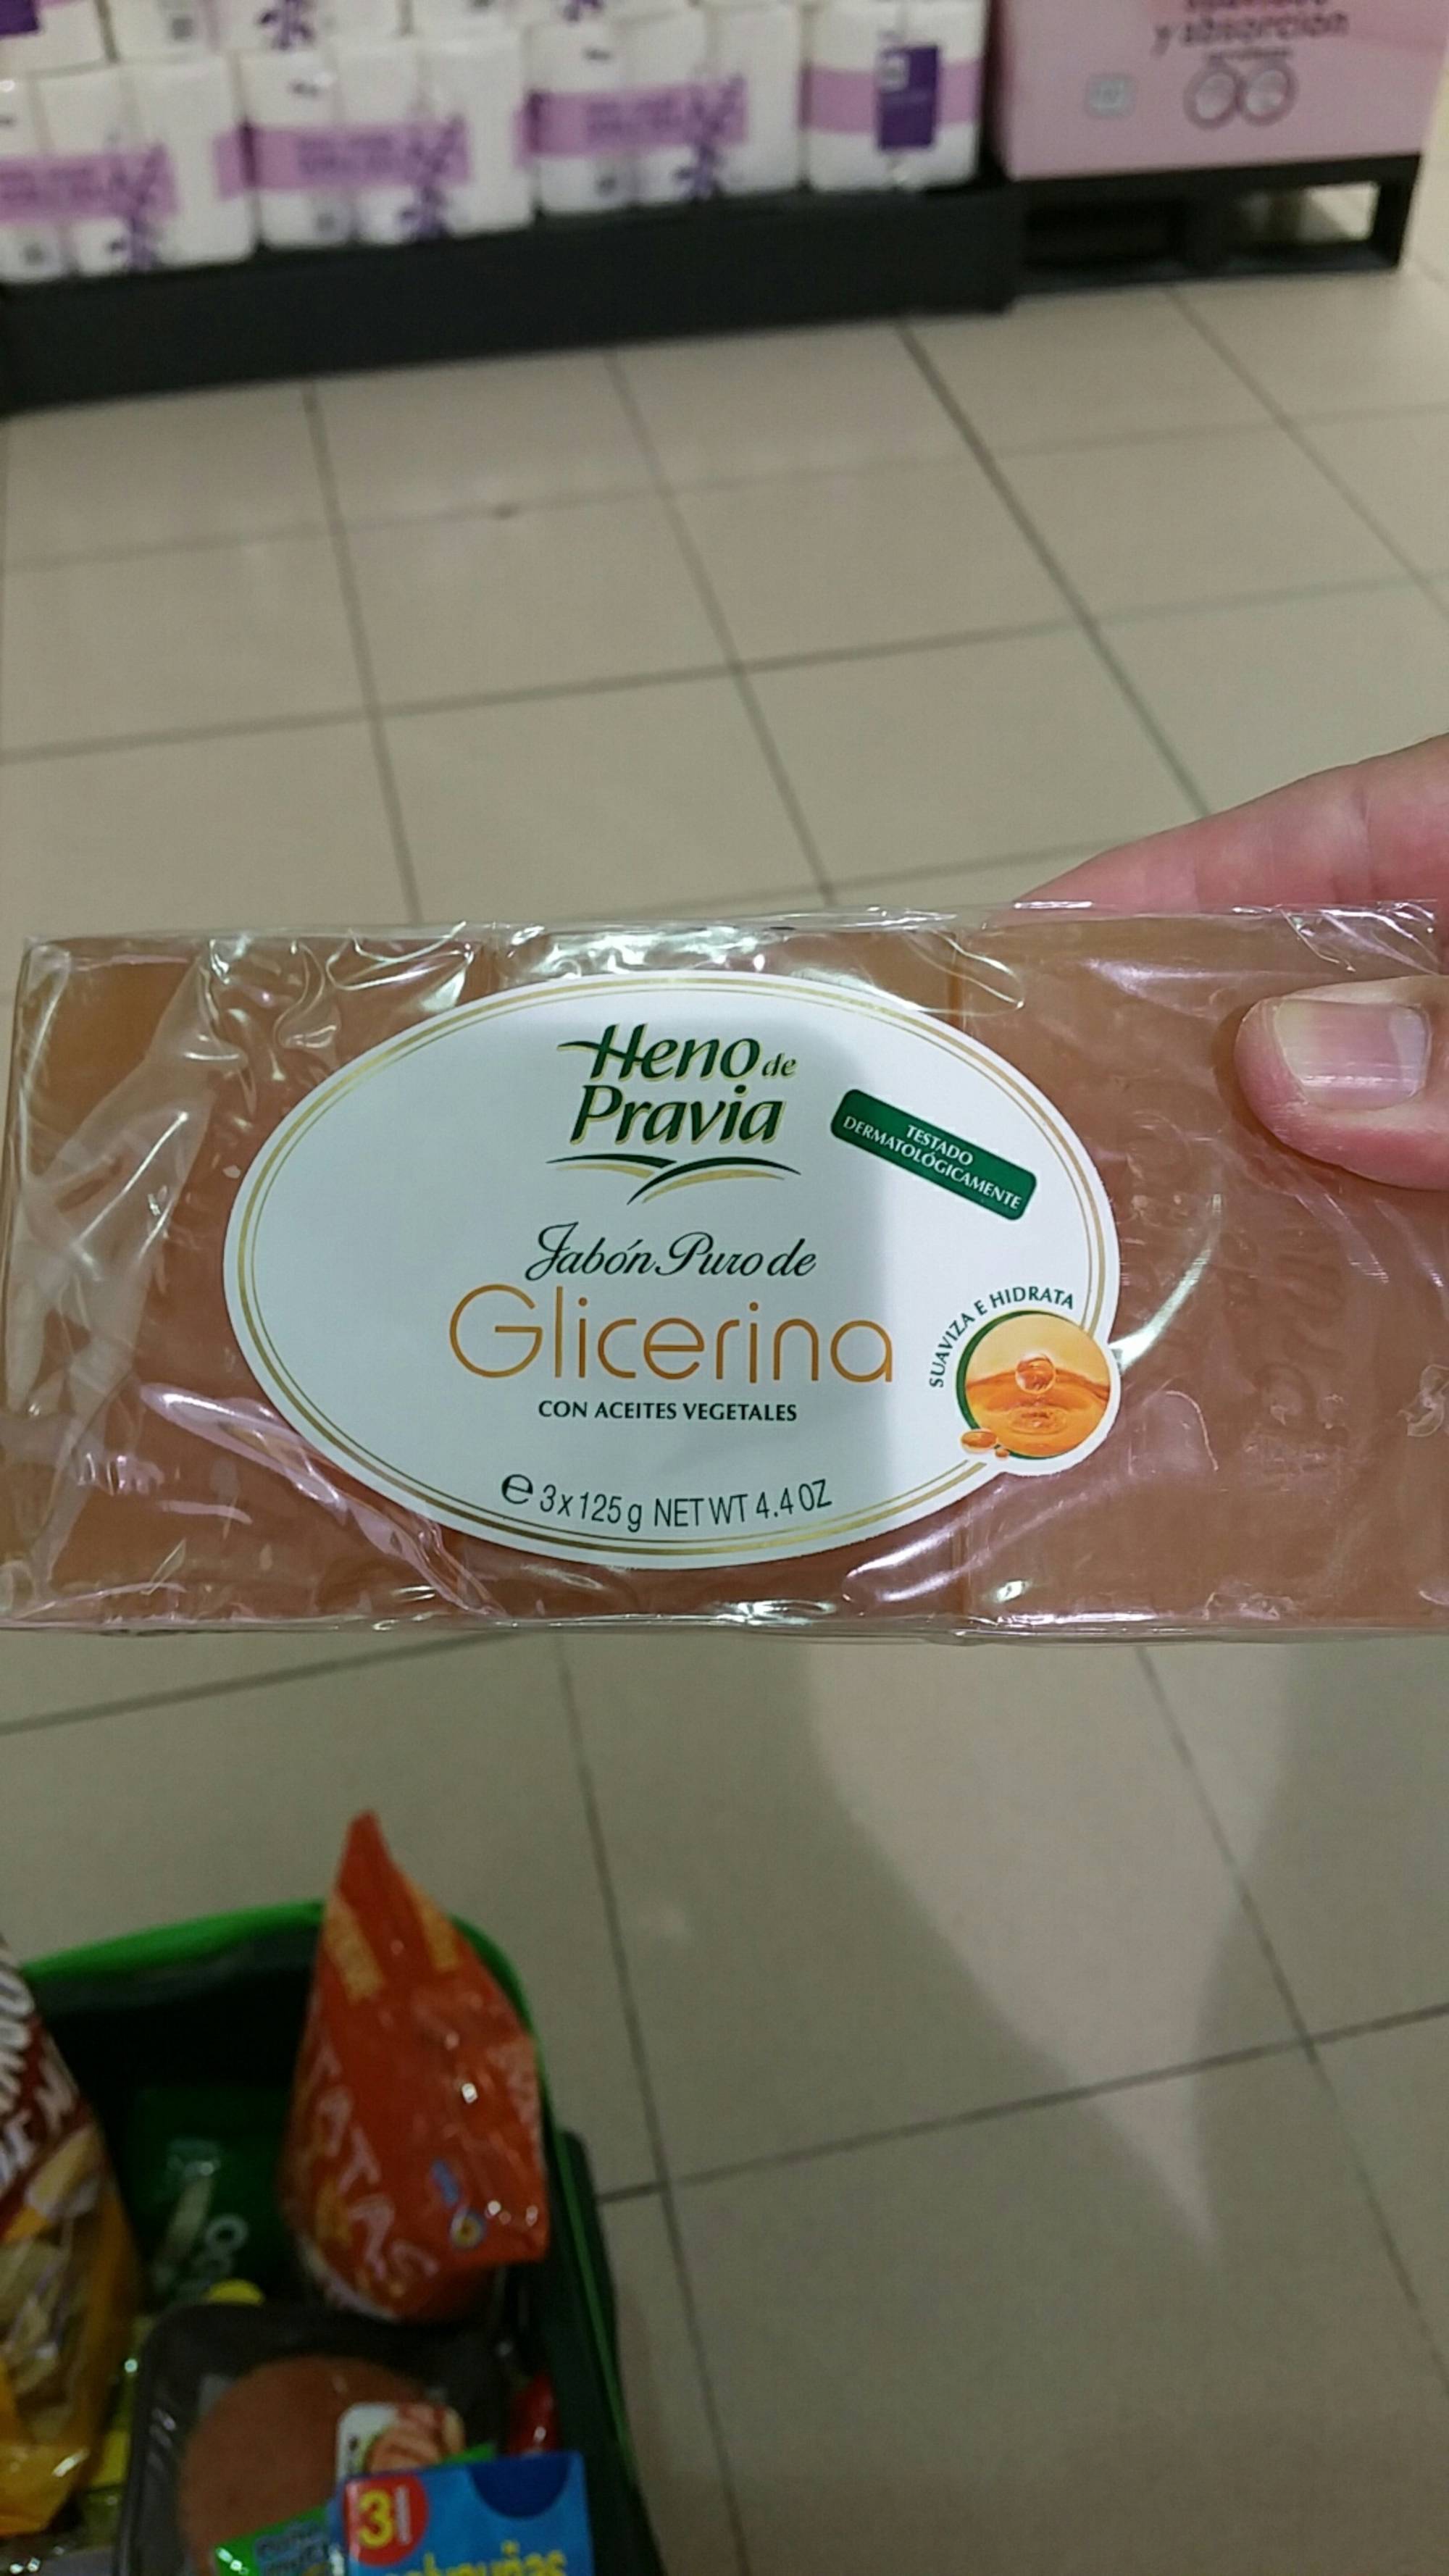 HENO DE PRAVIA - Jabona puro de glicerina